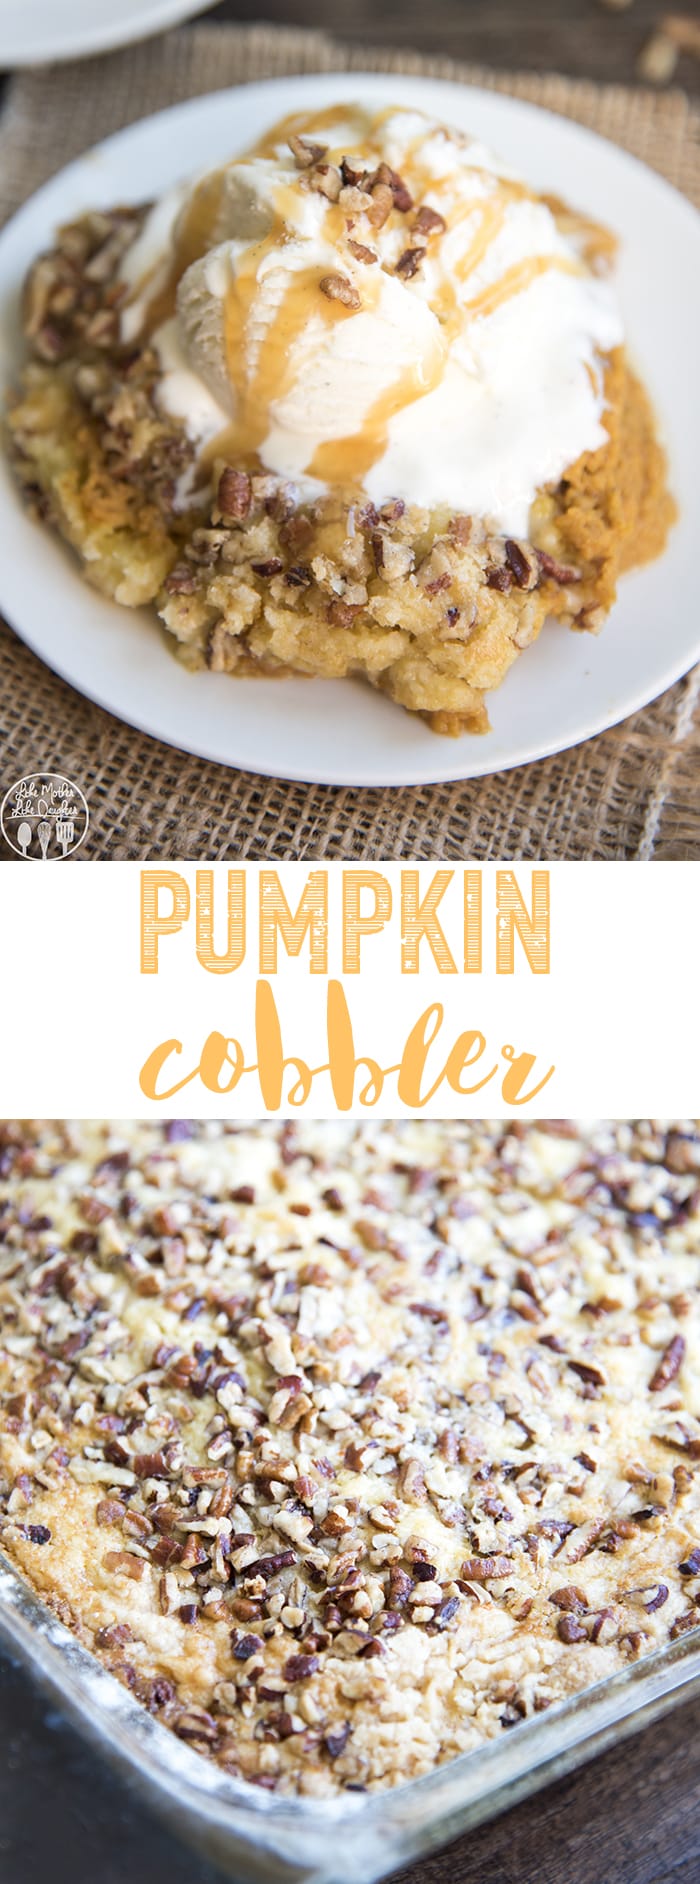 Pumpkin Cobbler is the perfect pumpkin dessert served warm with a big scoop of vanilla ice cream!